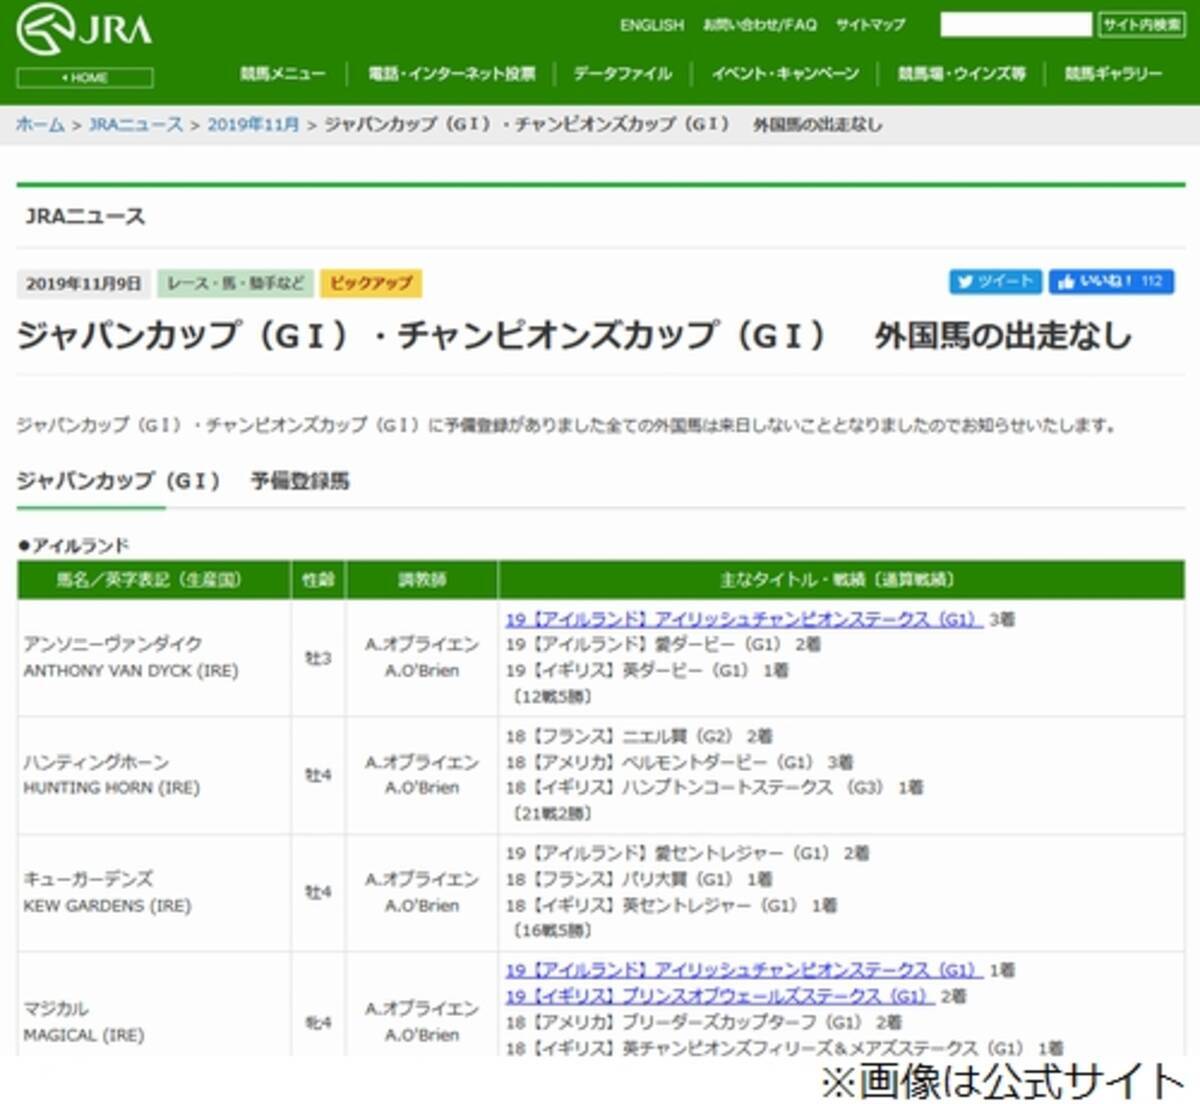 G1ジャパンカップ 外国馬の出走なし 創設以来初めて エキサイトニュース